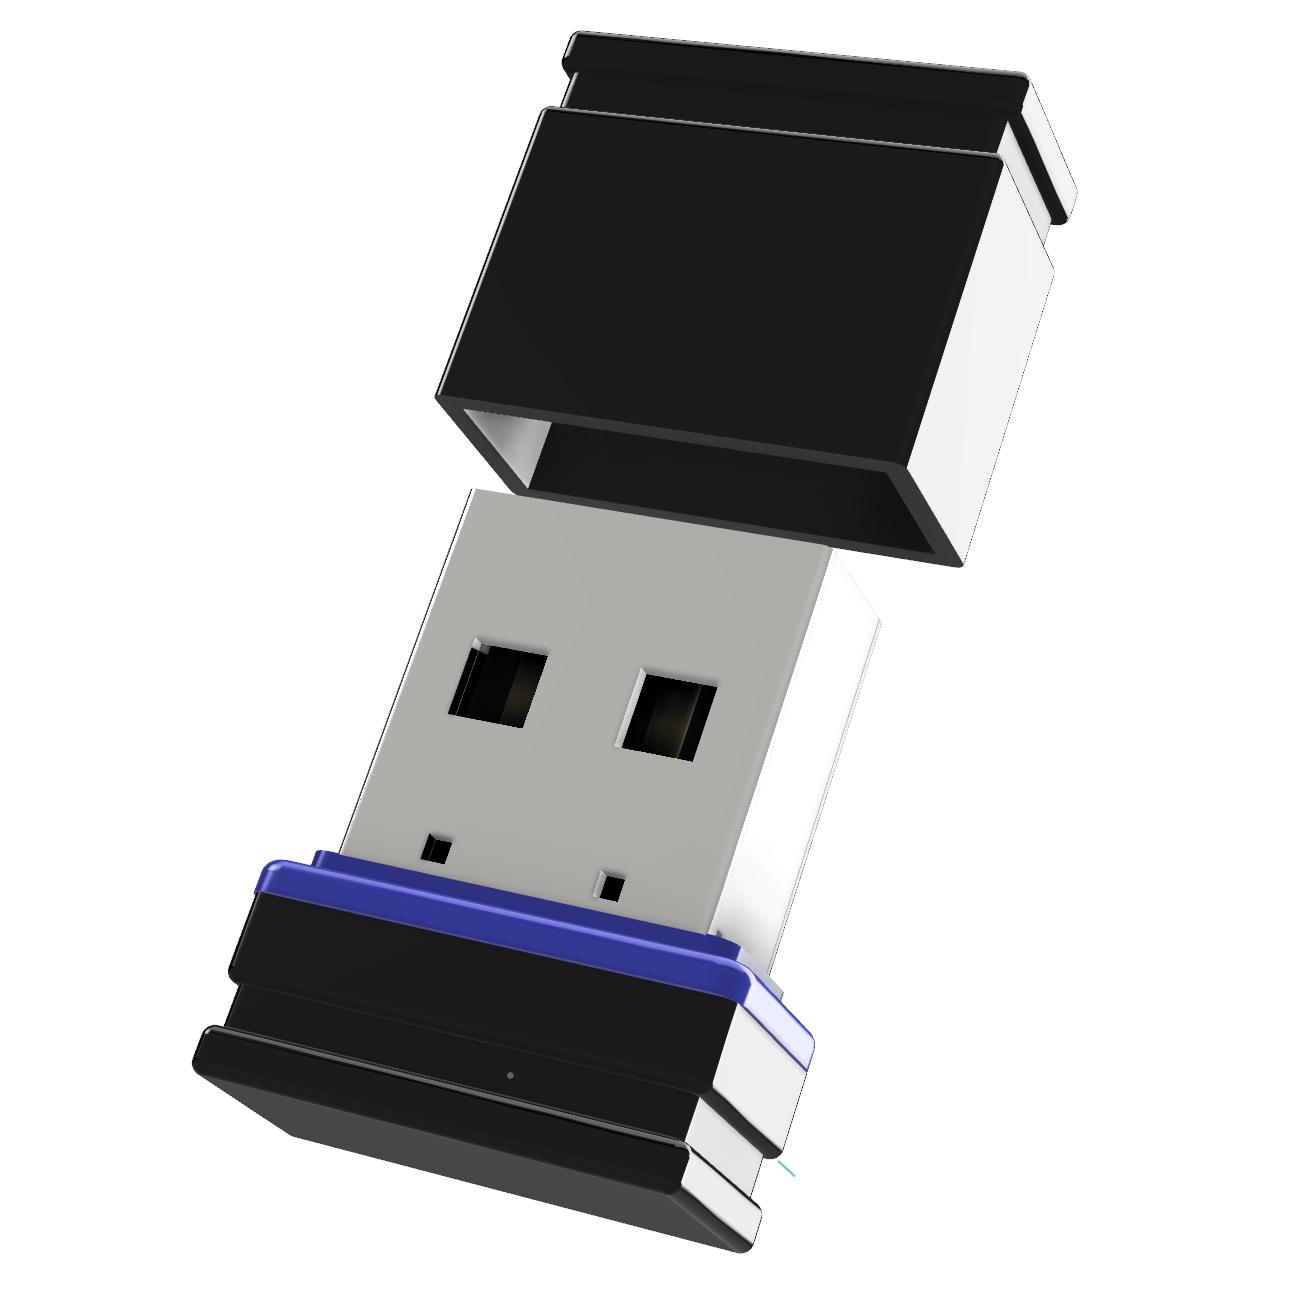 USB GERMANY USB-Stick P1 Mini (Schwarz/Blau, GB) ®ULTRA 1